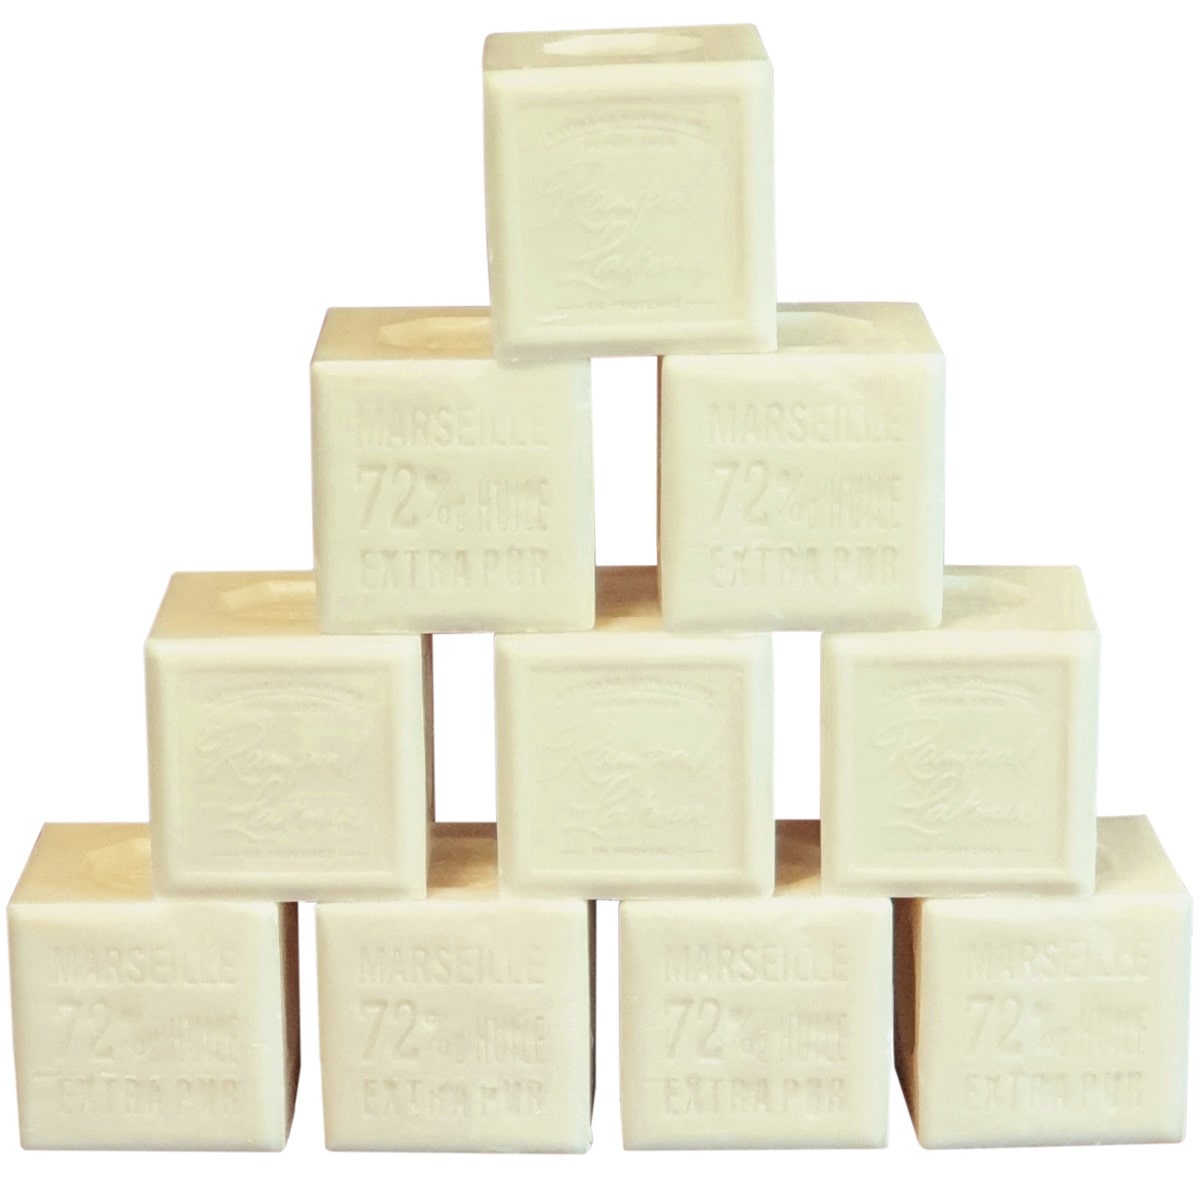 Carton de 10 cubes de savon de Marseille aux huiles végétales - Cosmos Natural